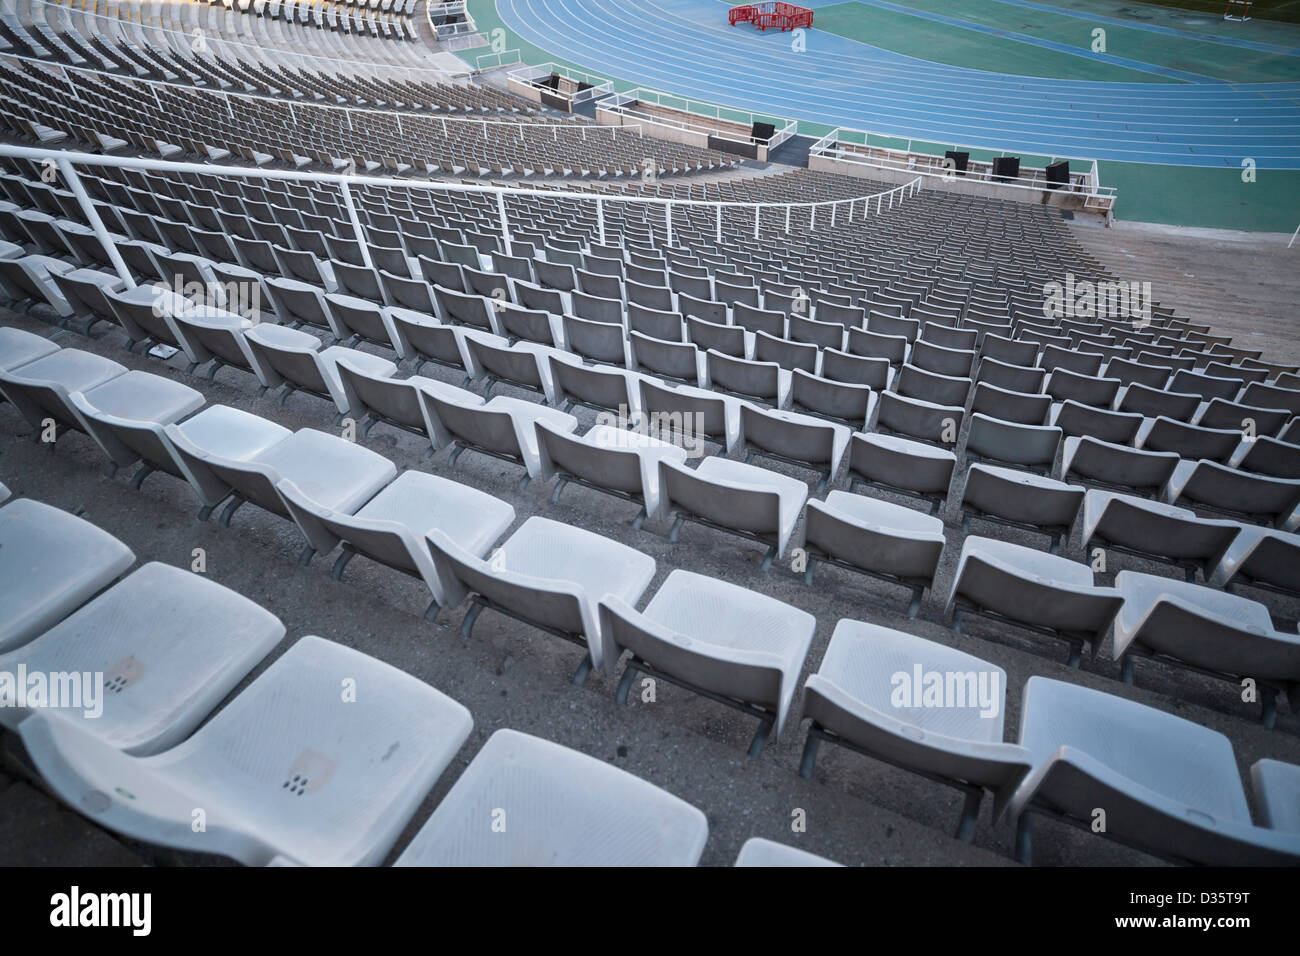 Olympic stadium Lluis Companys in montjuic,Barcelona Stock Photo